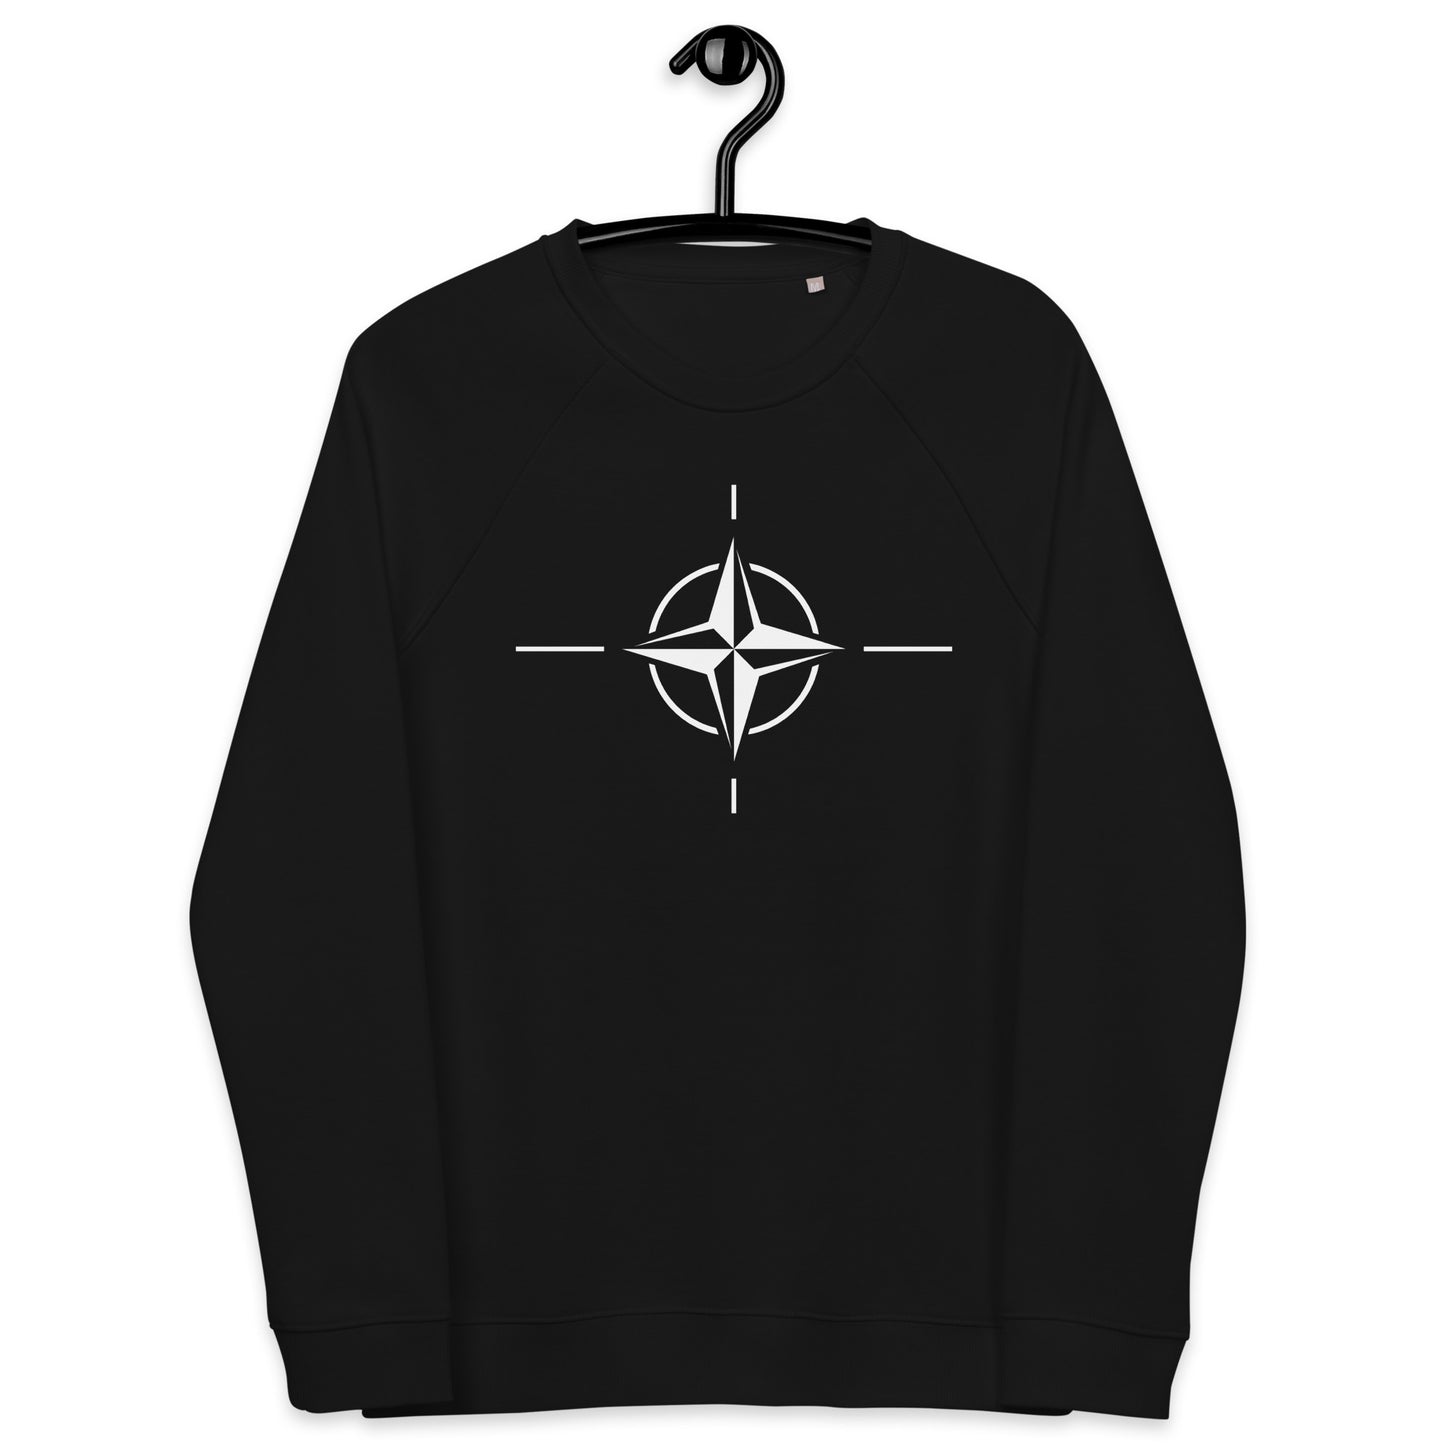 NATO jumper 